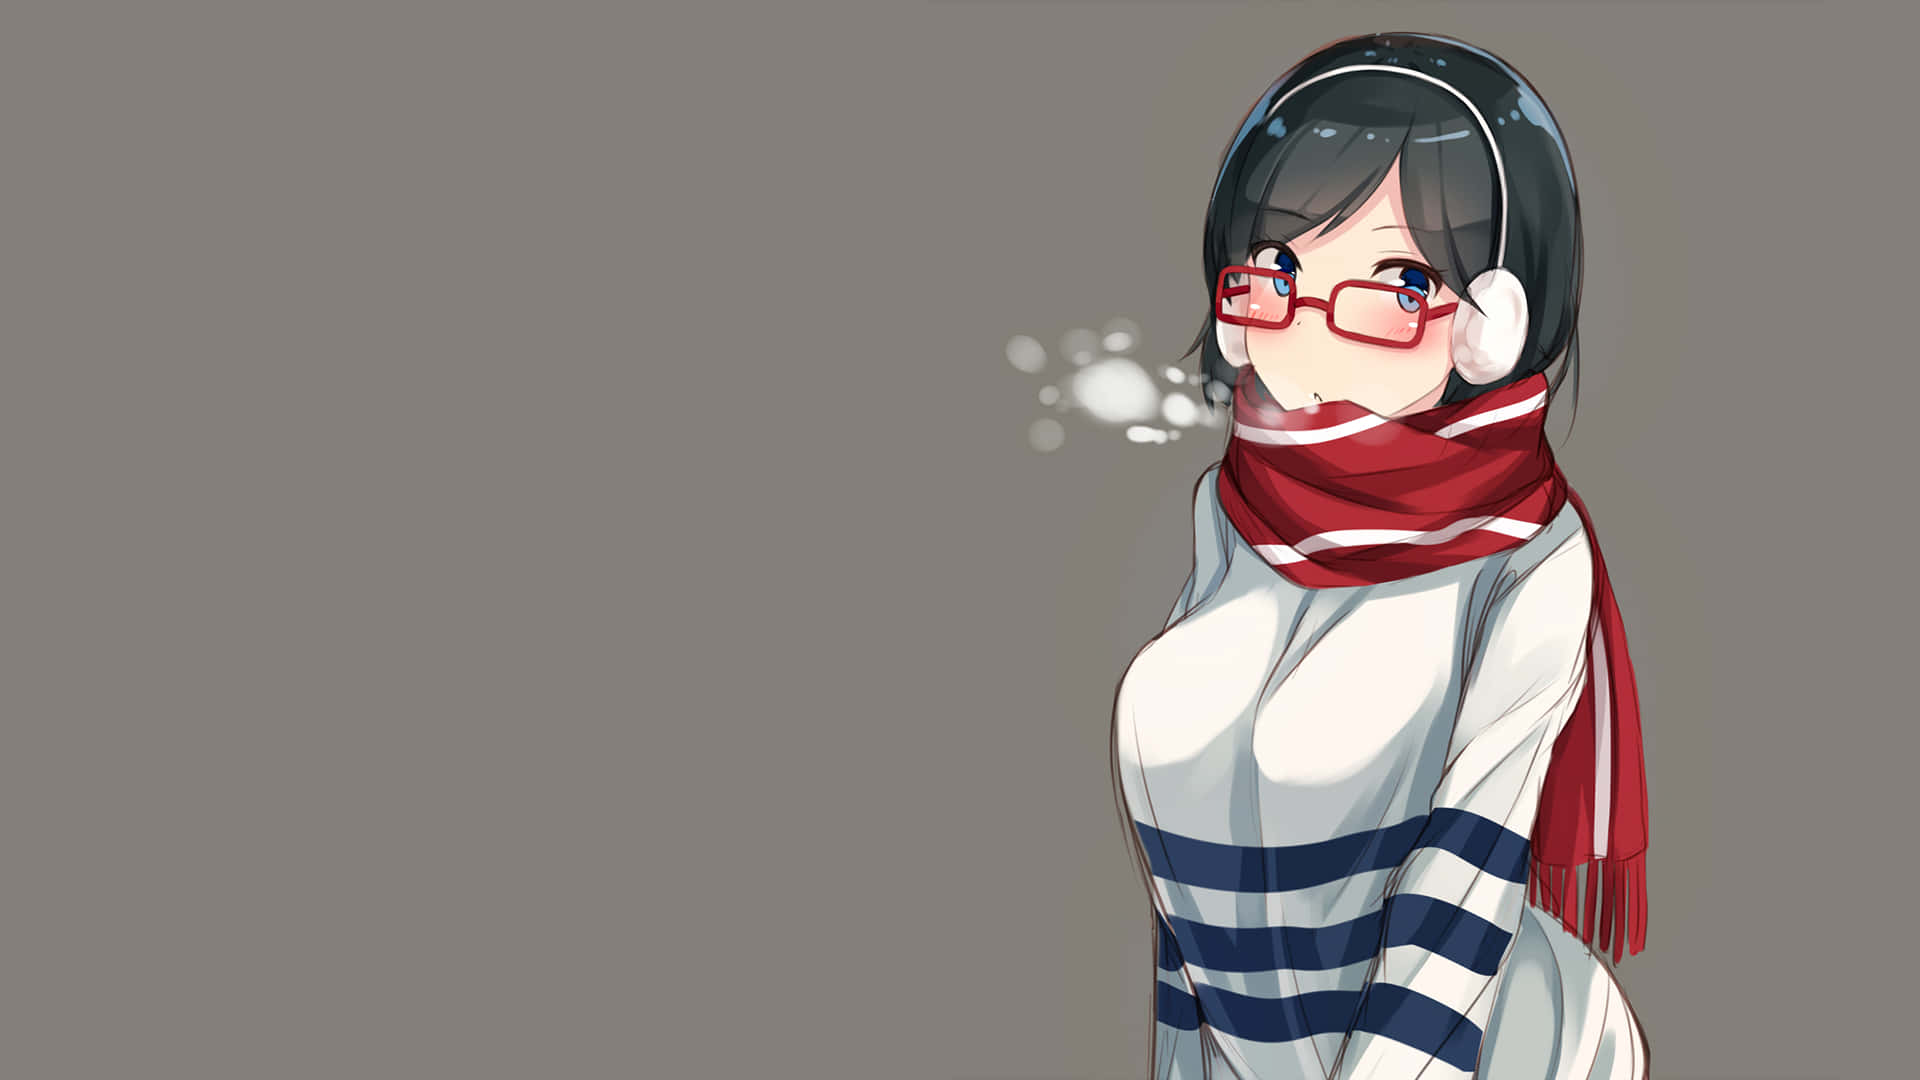 Blushing Anime With Red Eyeglasses Wallpaper